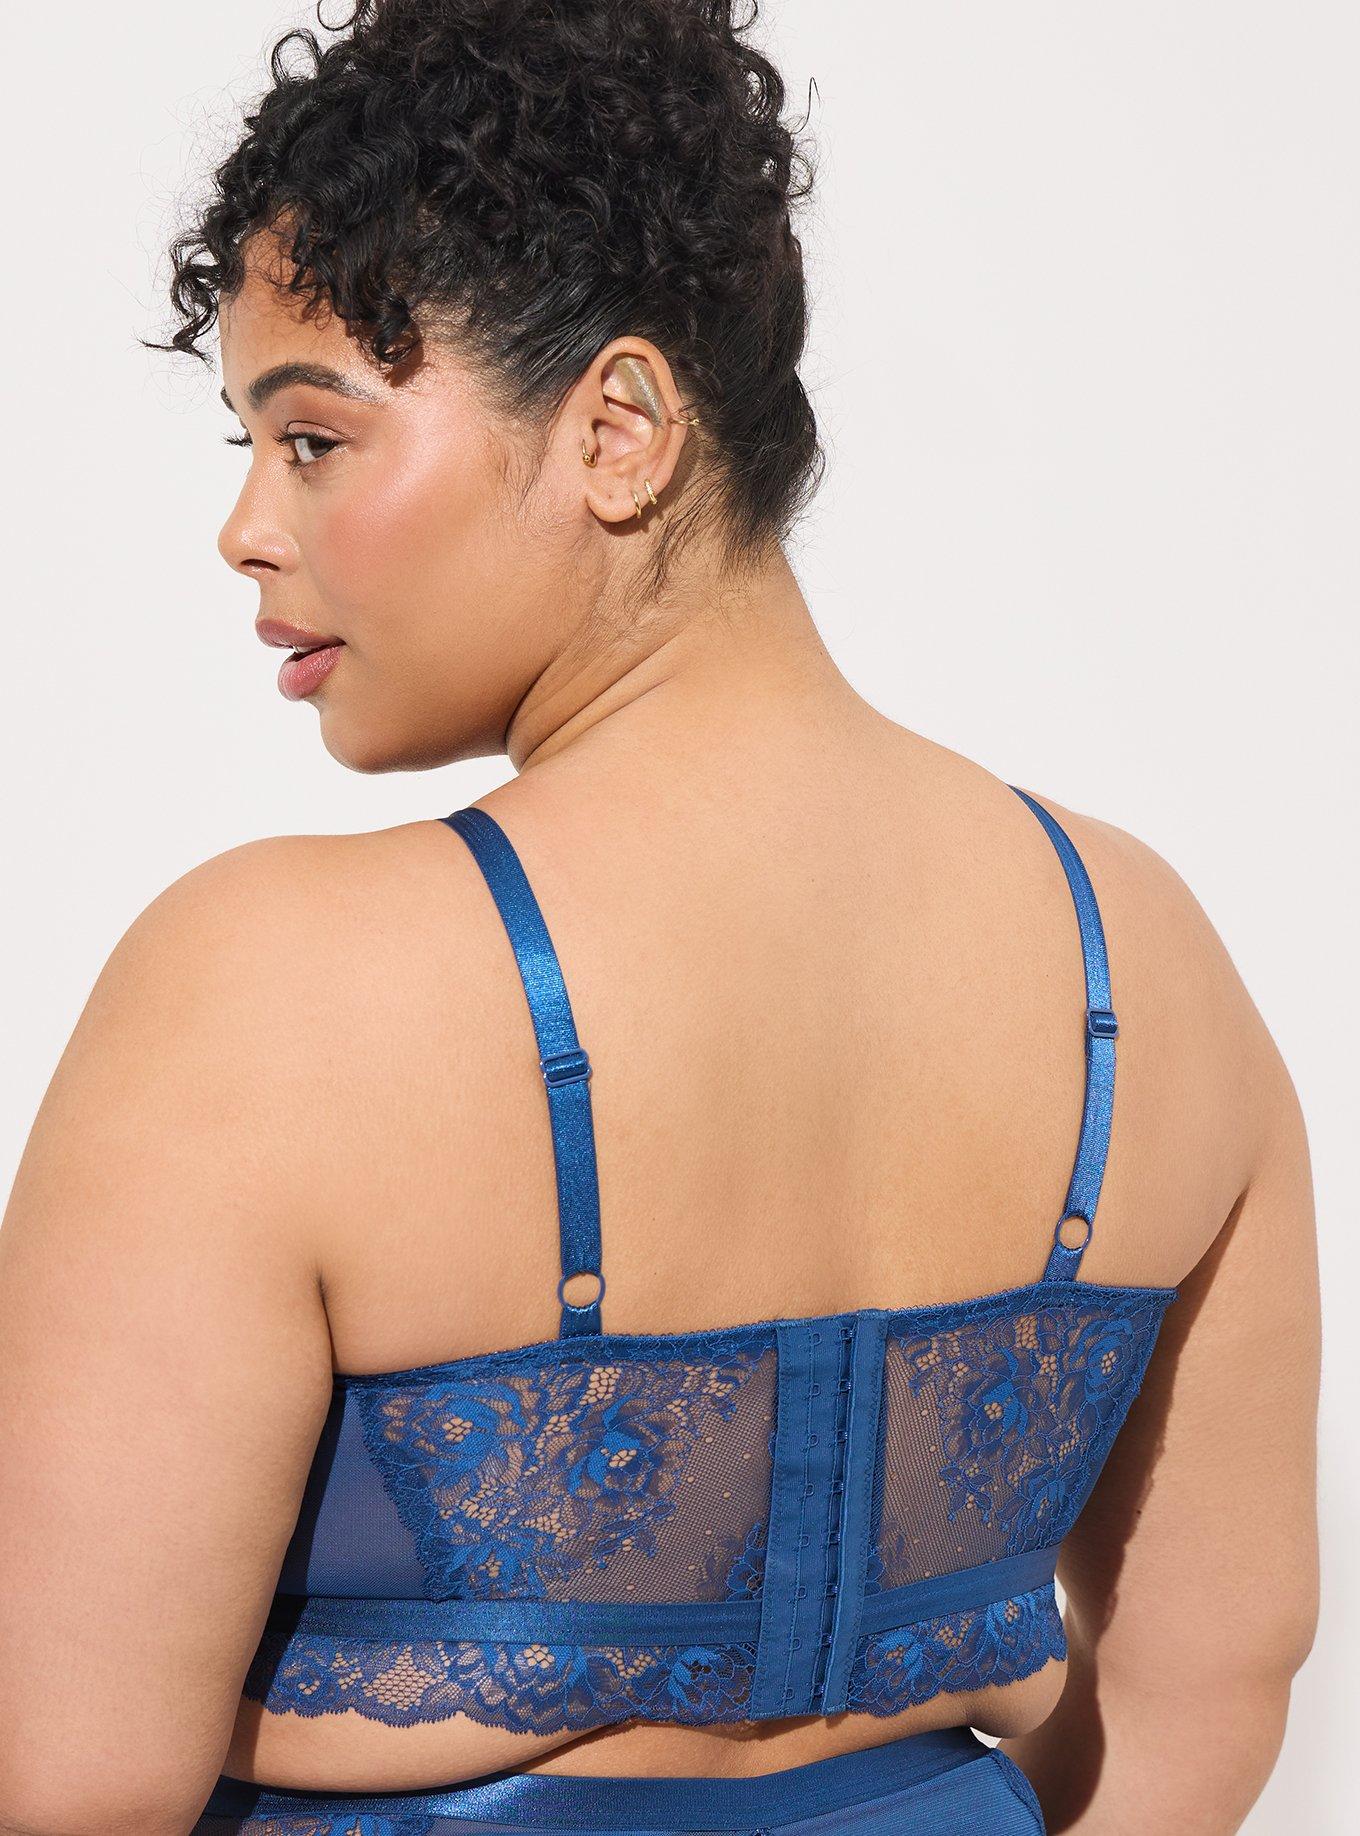 torrid, Intimates & Sleepwear, Torrid Blue Strappy Studded Lace Wirefree  Bralette Size